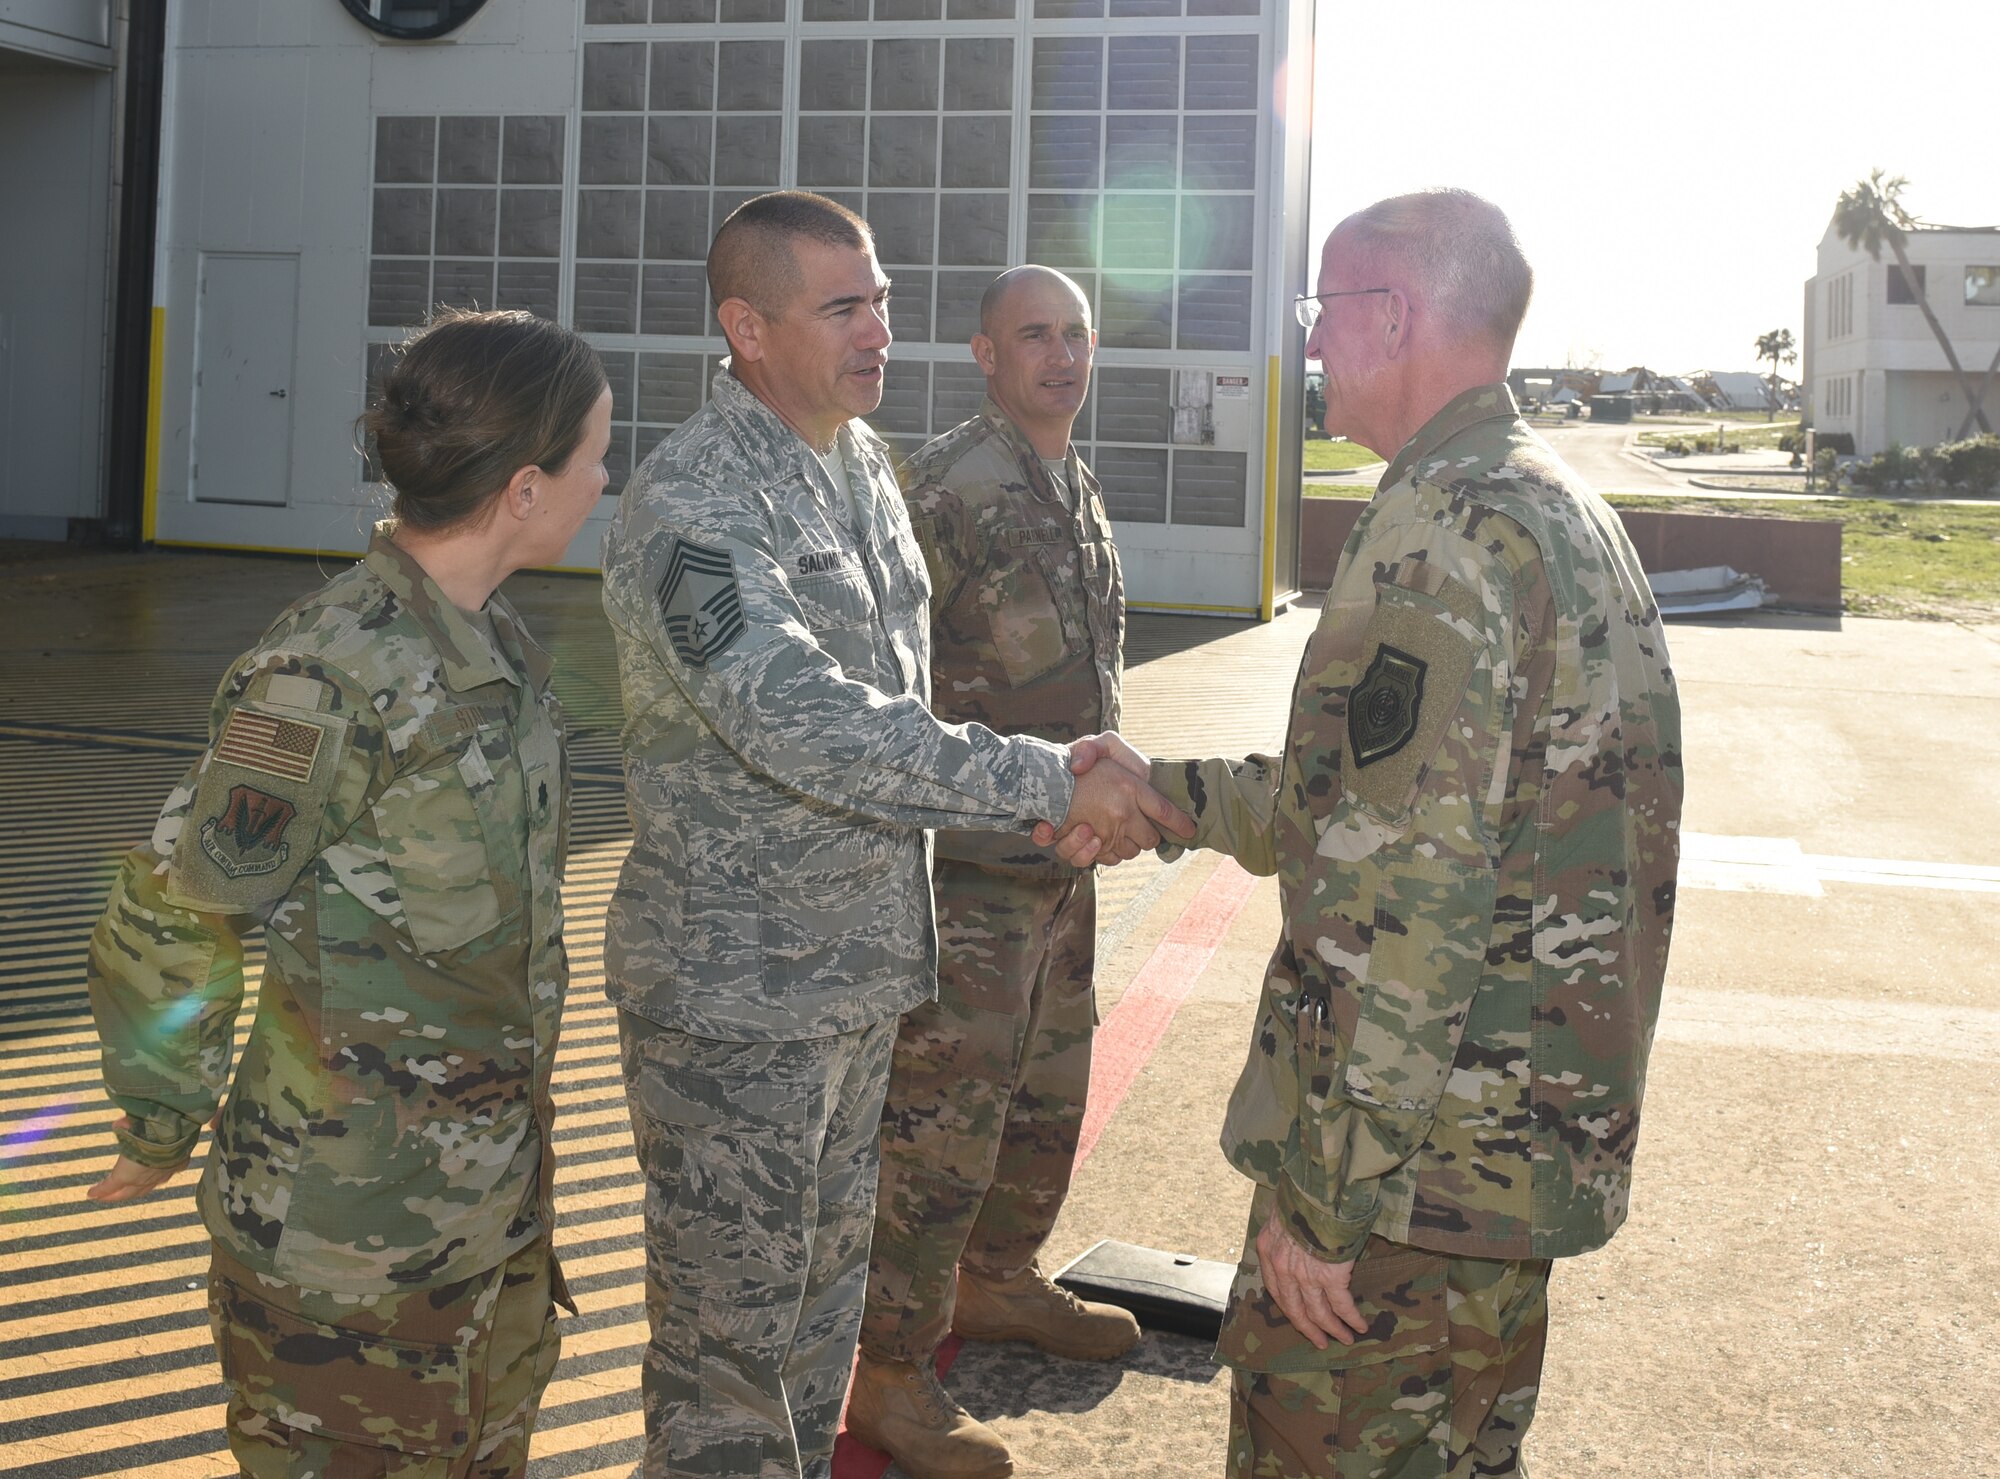 U.S. Air Force officials greet each other